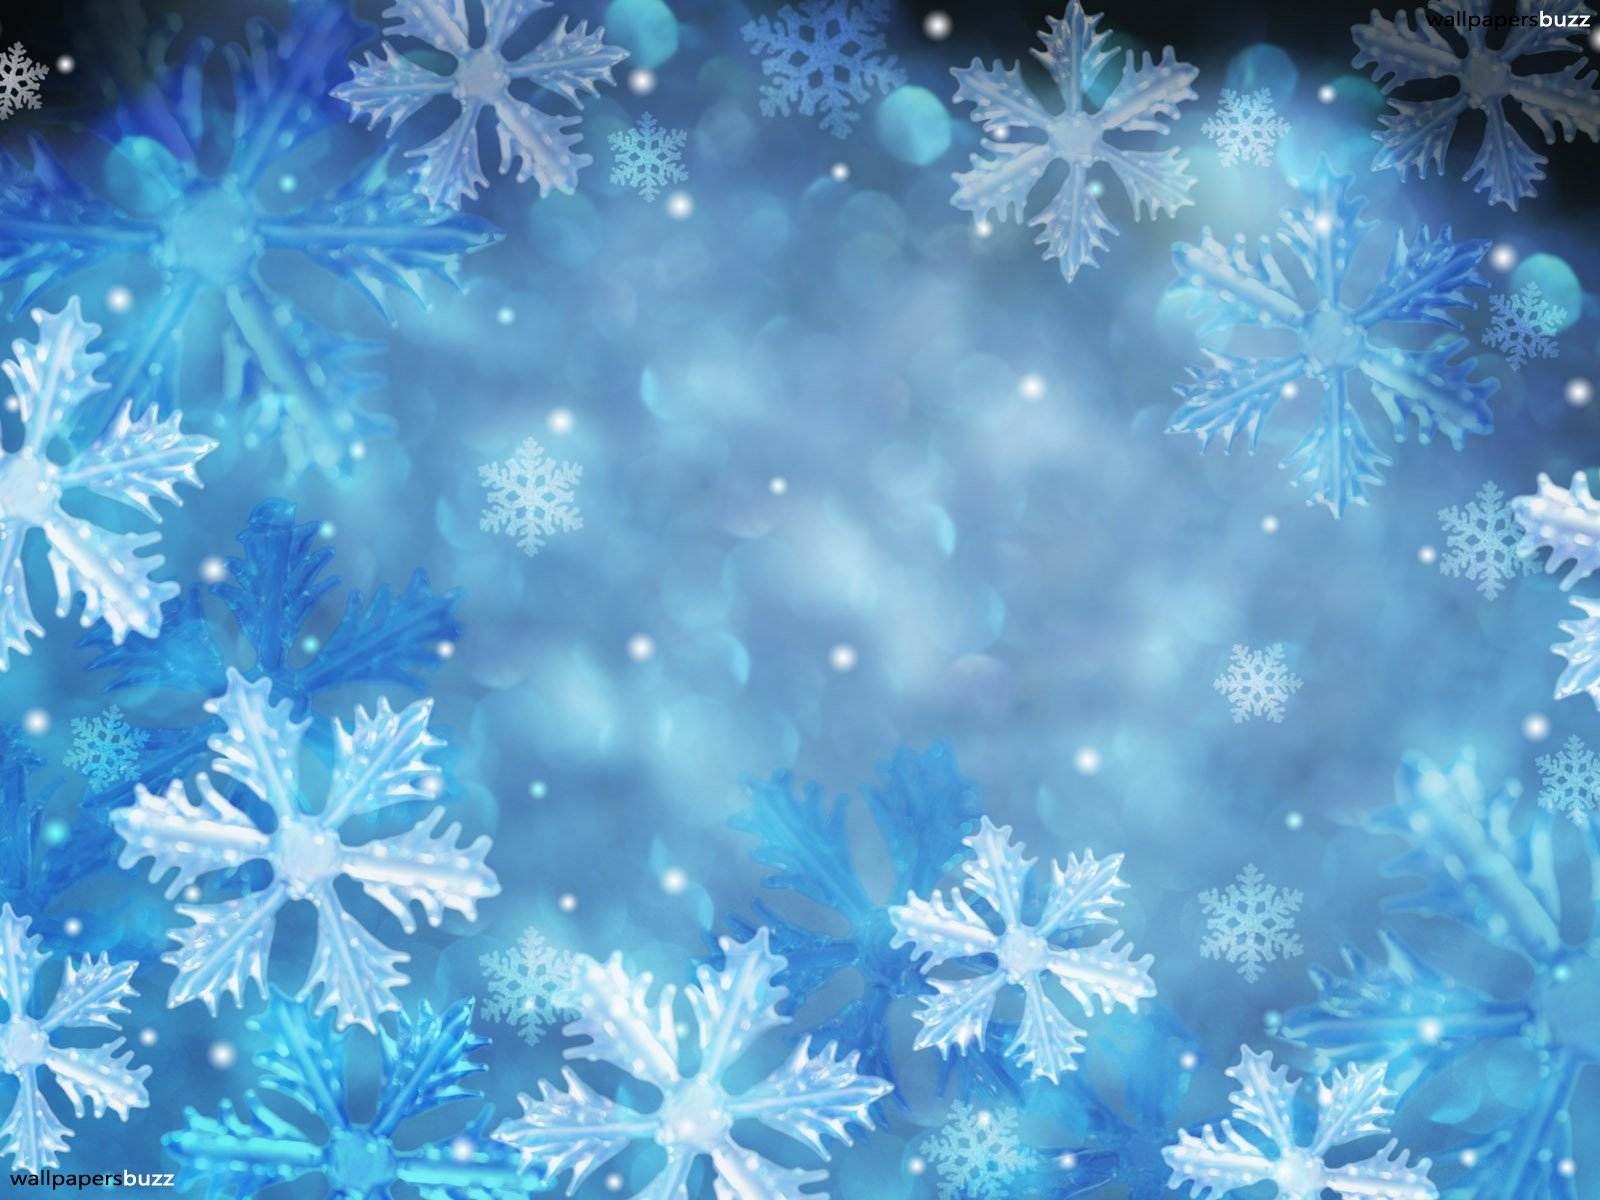 Wallpaper Background Snowflake Desktop